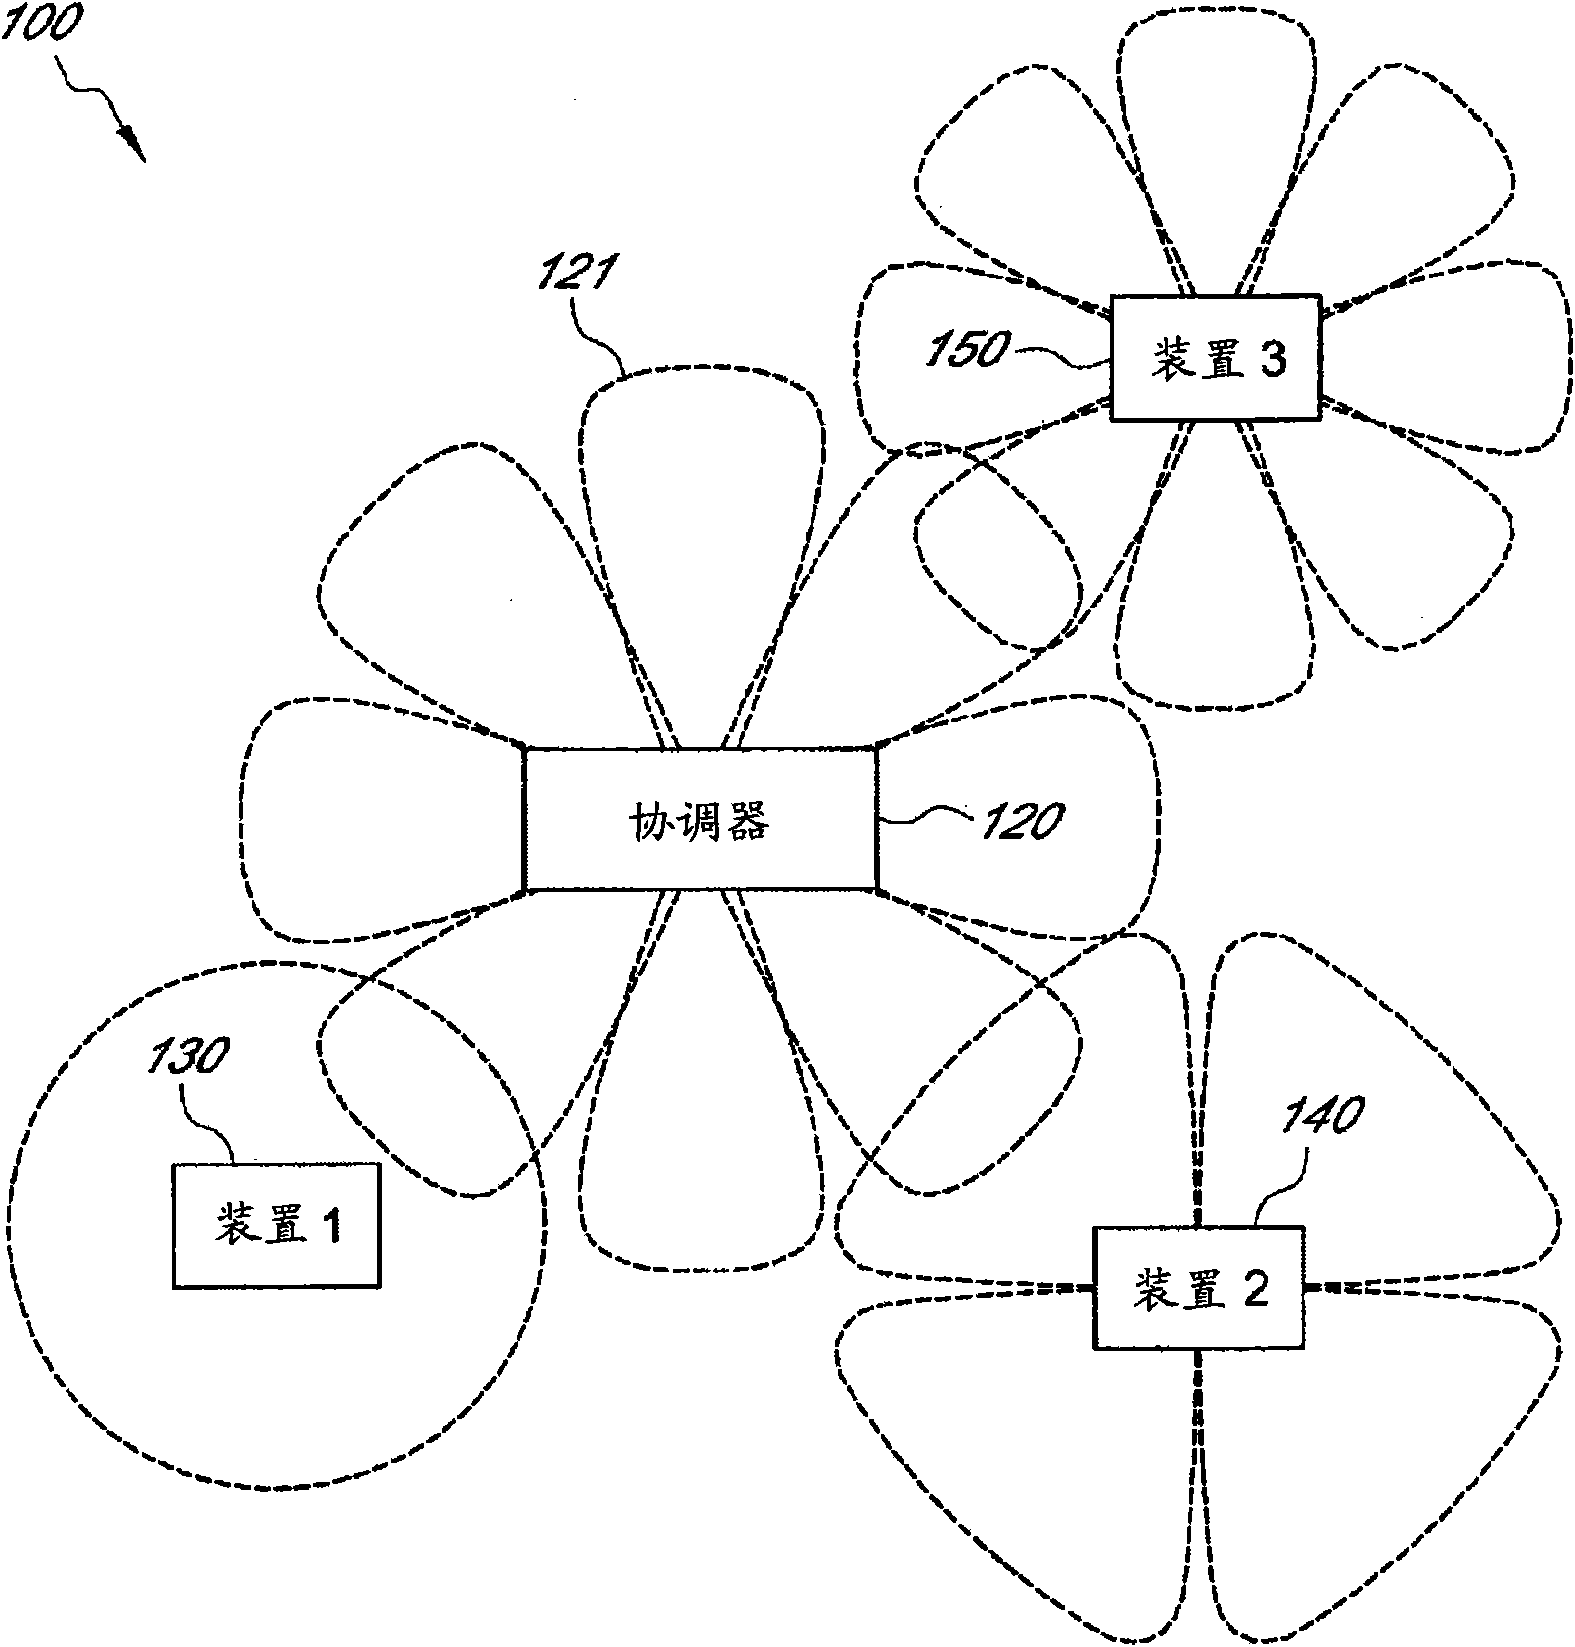 System and method for pseudorandom permutation for interleaving in wireless communications